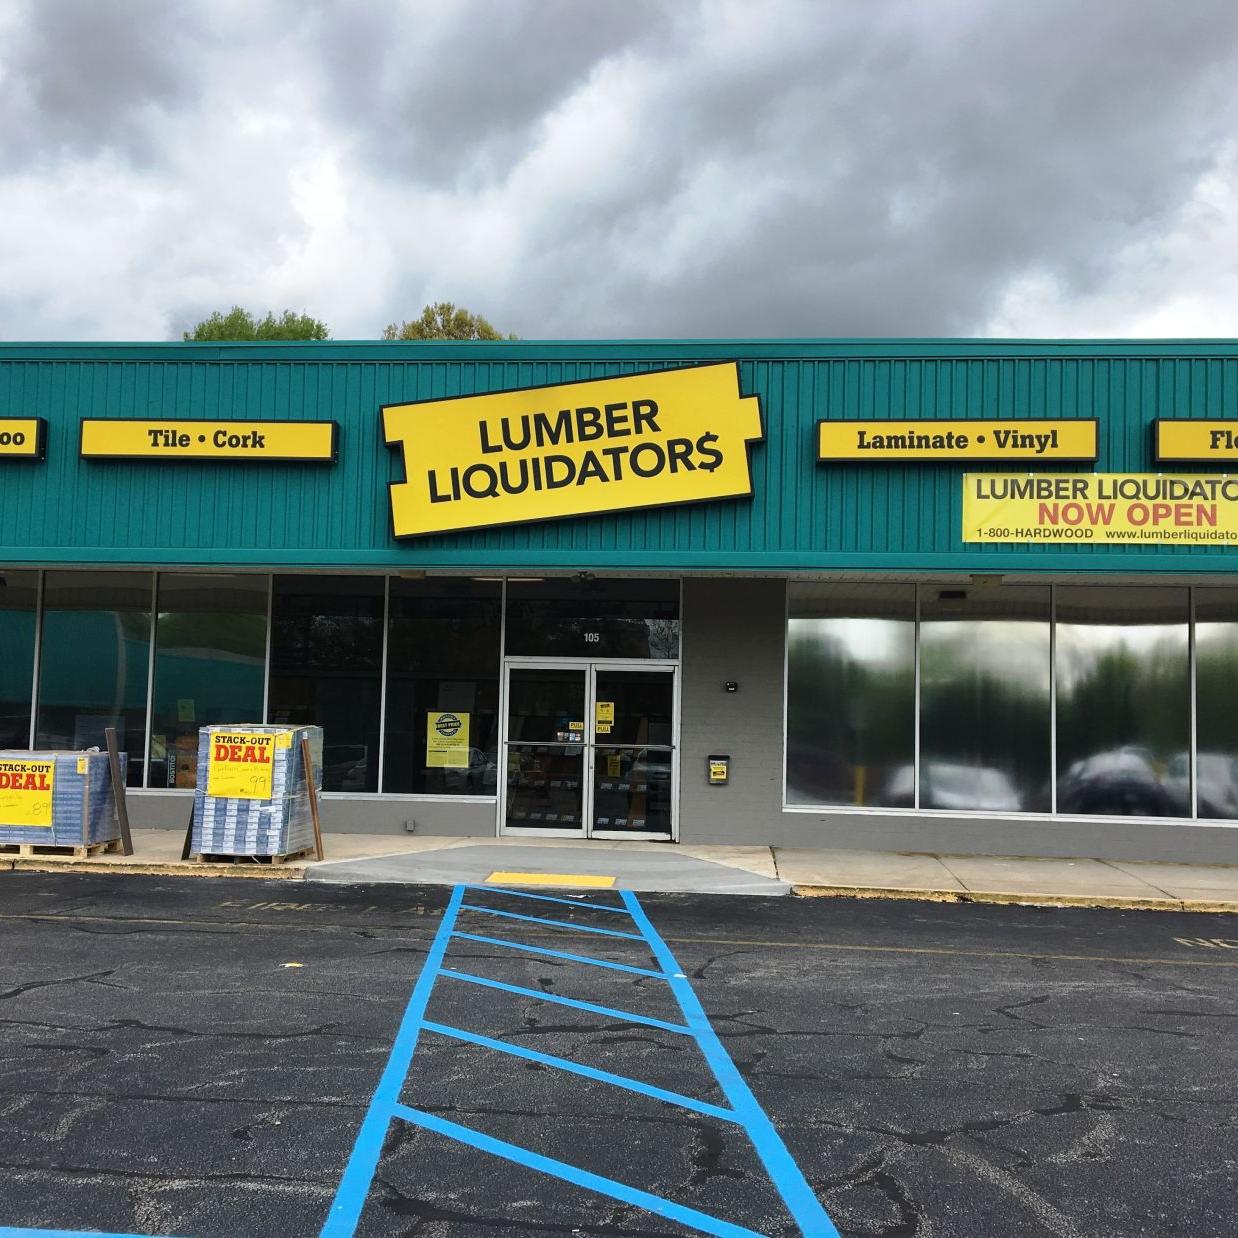 New Store In Town Lumber Liquidators Business News Godanriver Com